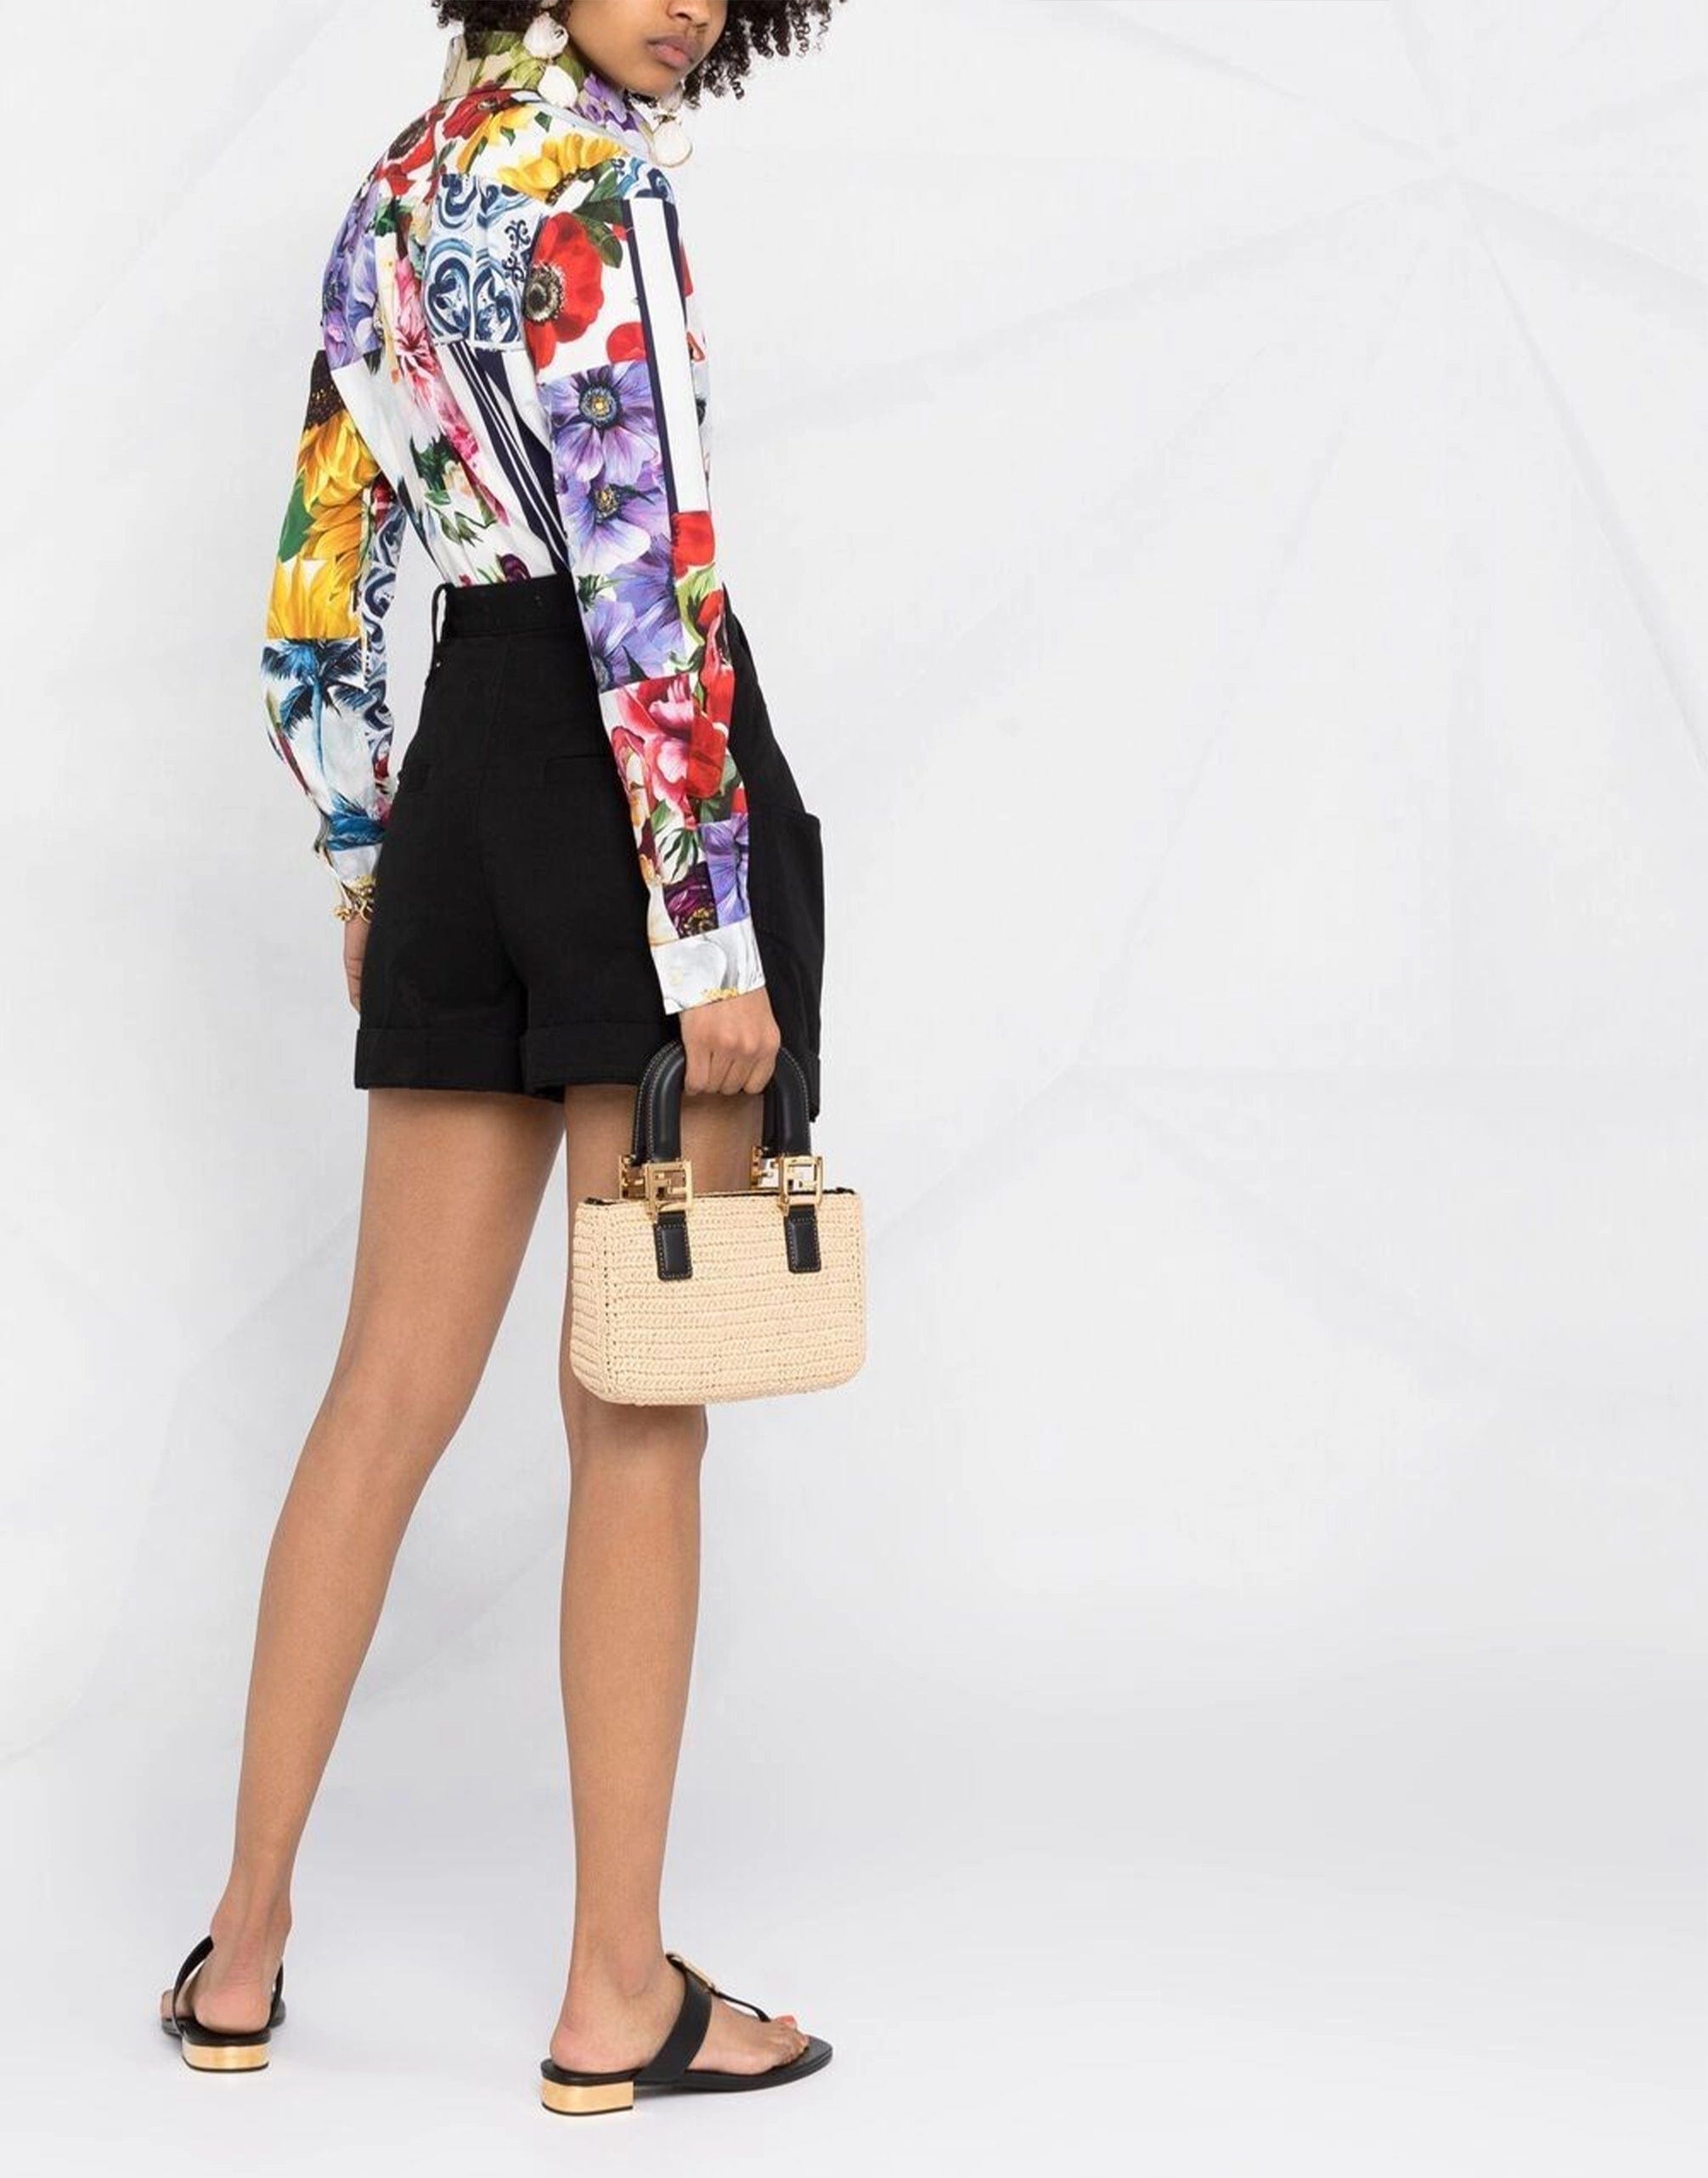 Dolce & Gabbana Patchwork Print Multicolor Shirt